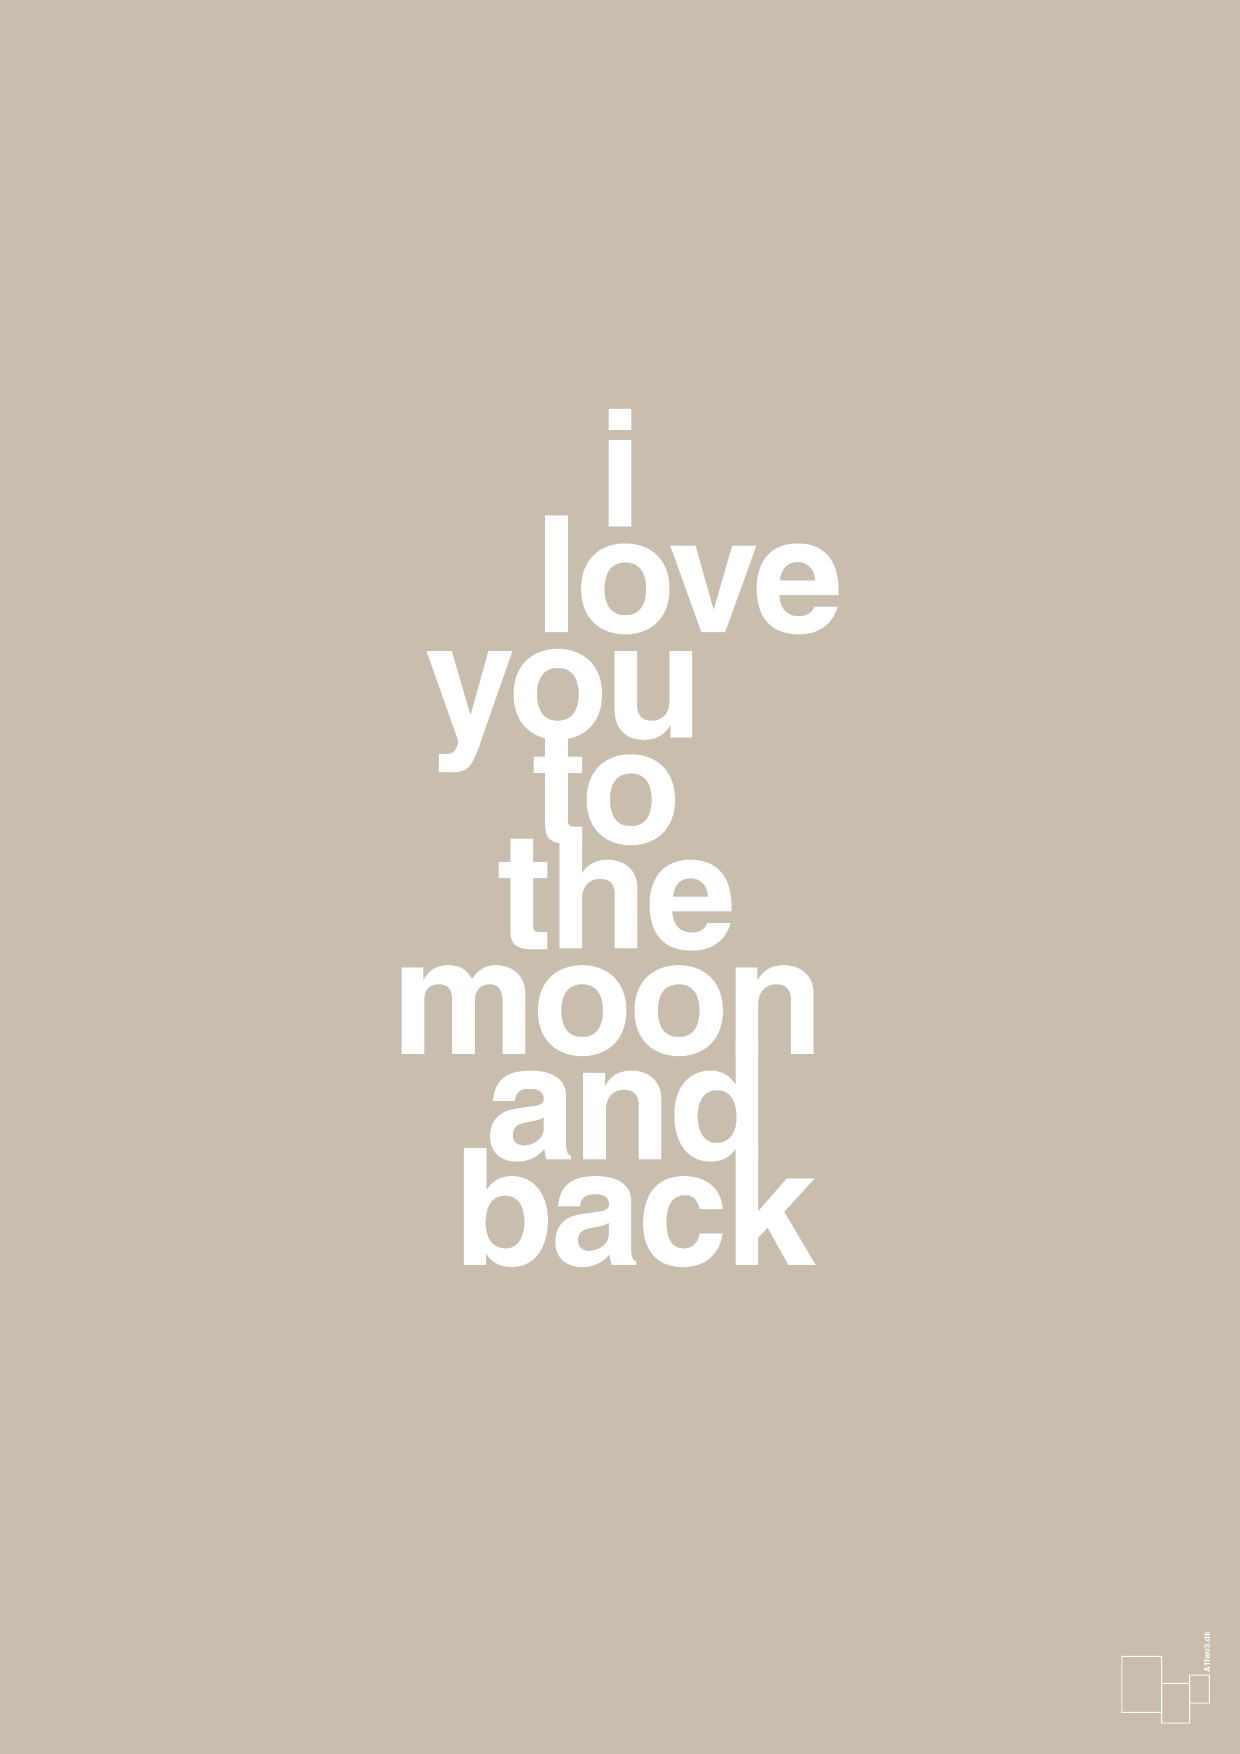 i love you to the moon and back - Plakat med Ordsprog i Creamy Mushroom